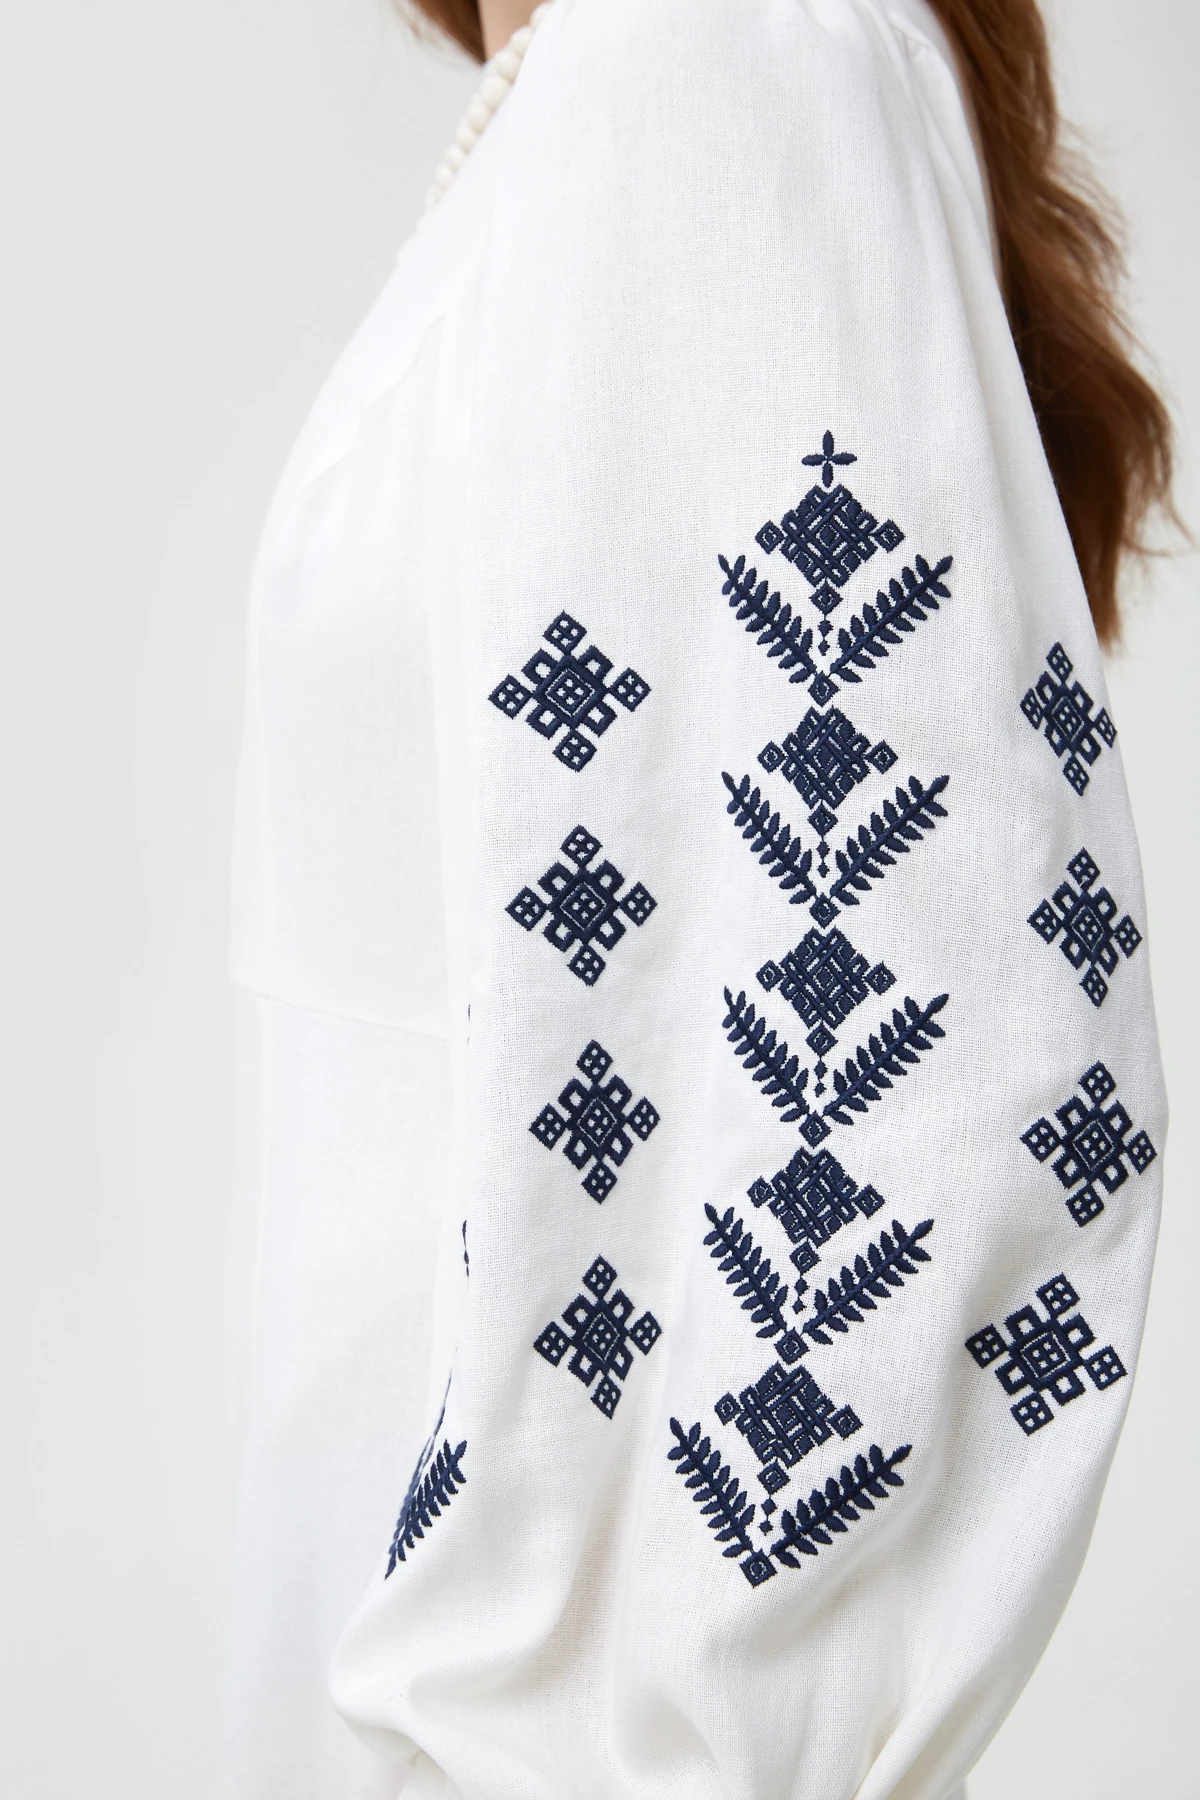 Milky linen vyshyvanka dress with rhombus embroidery, photo 4